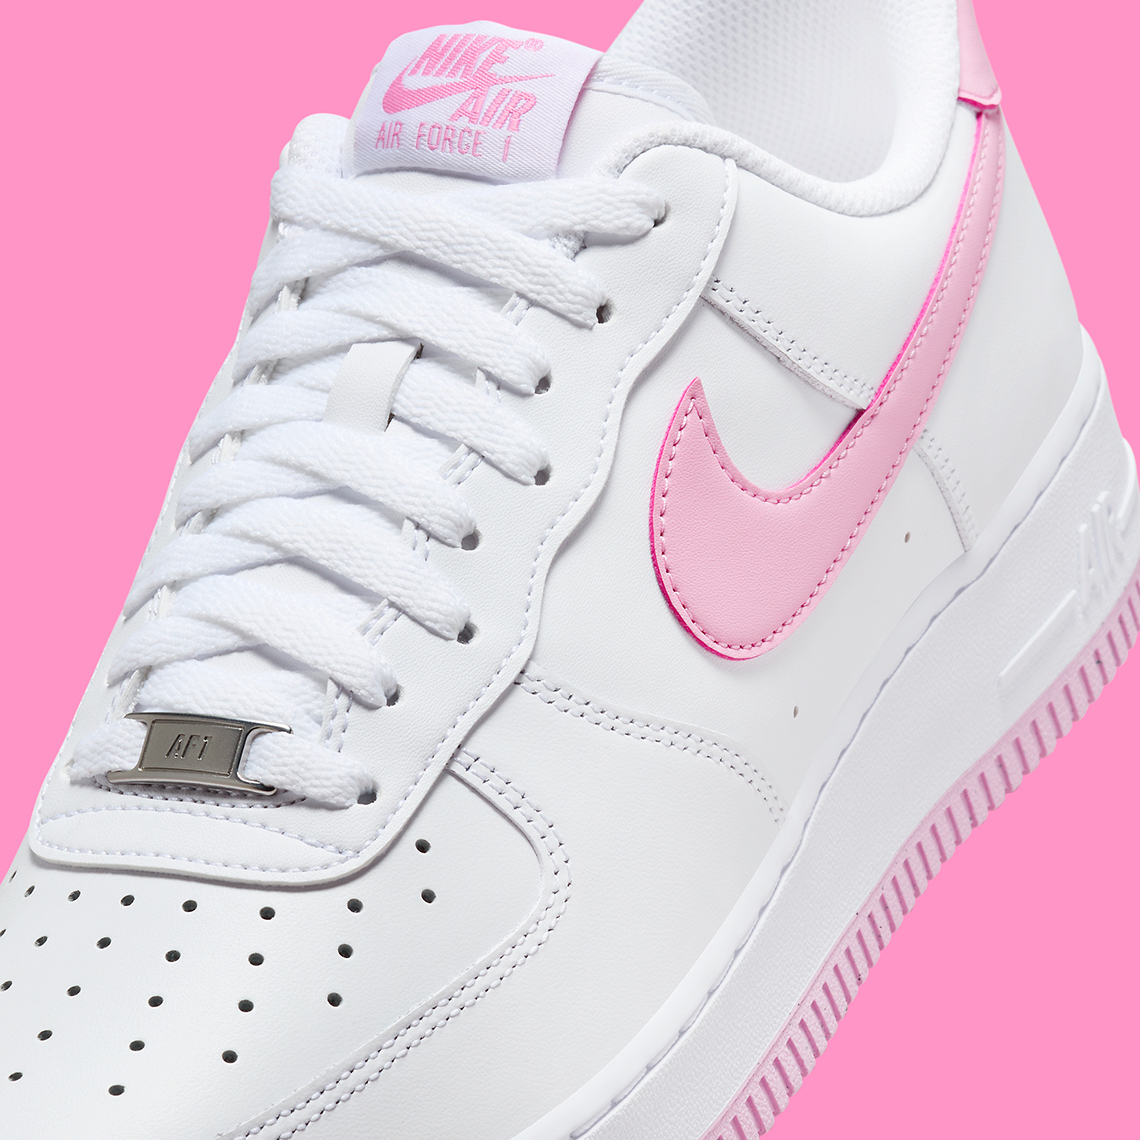 Nike Air Force 1 Low White Pink Fj4146 101 2